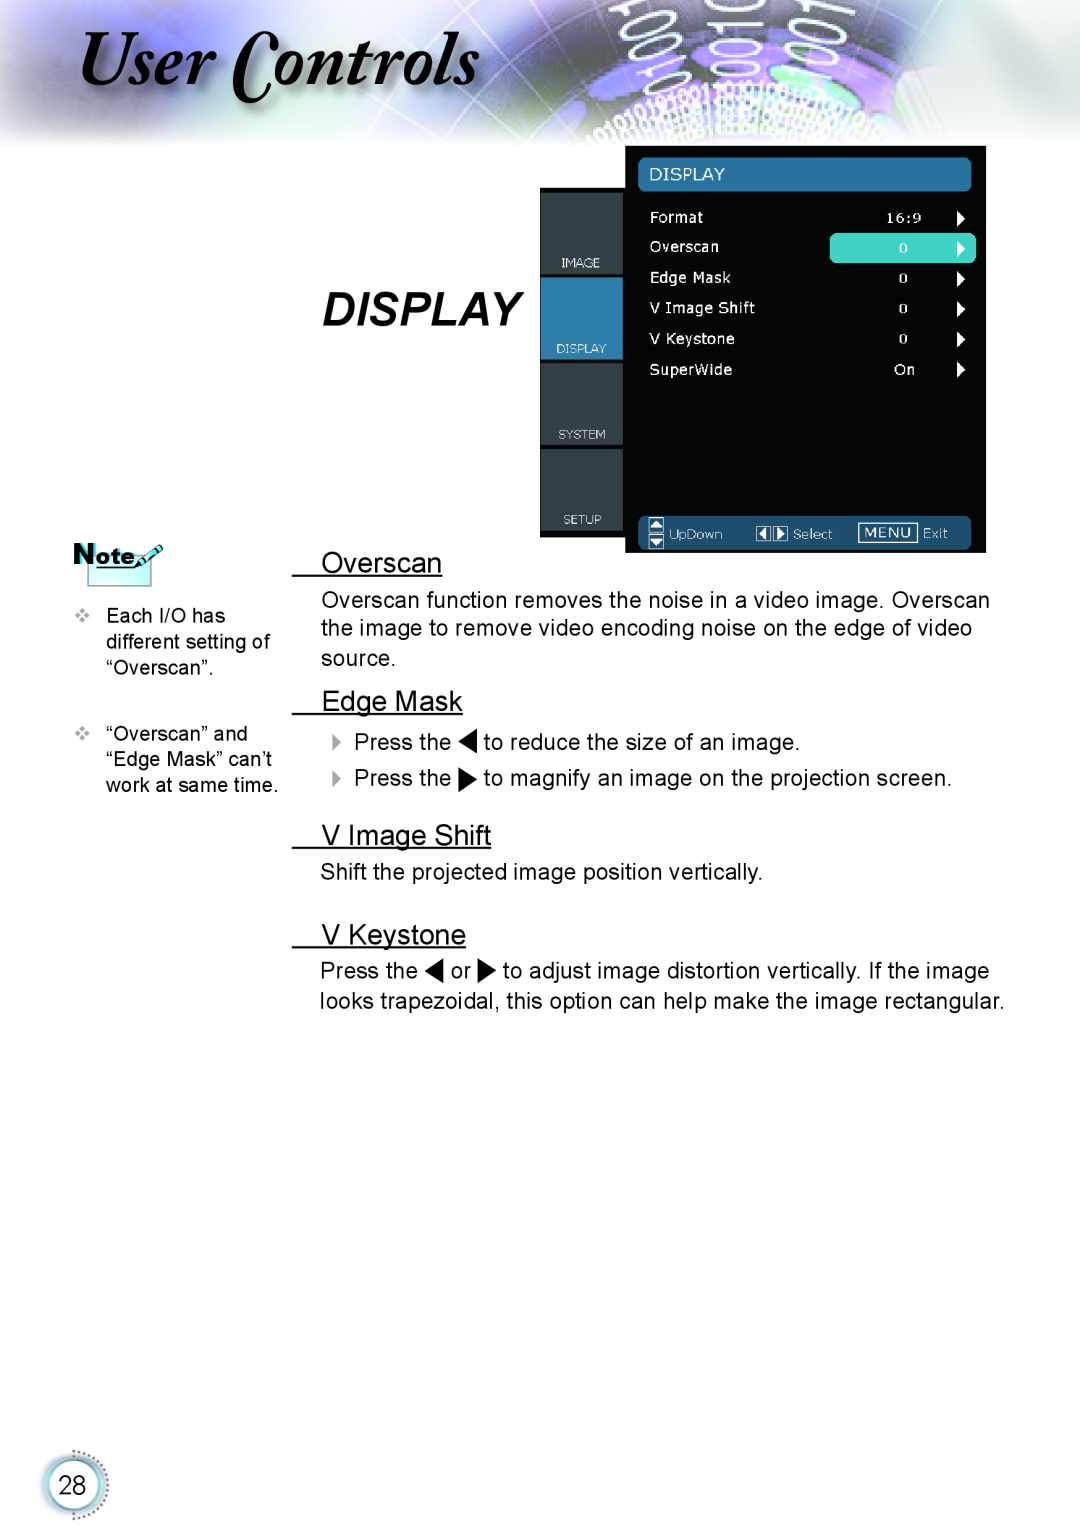 Optoma Technology HD20 manual Overscan, Edge Mask, V Image Shift, V Keystone, ser ontrols, Display 